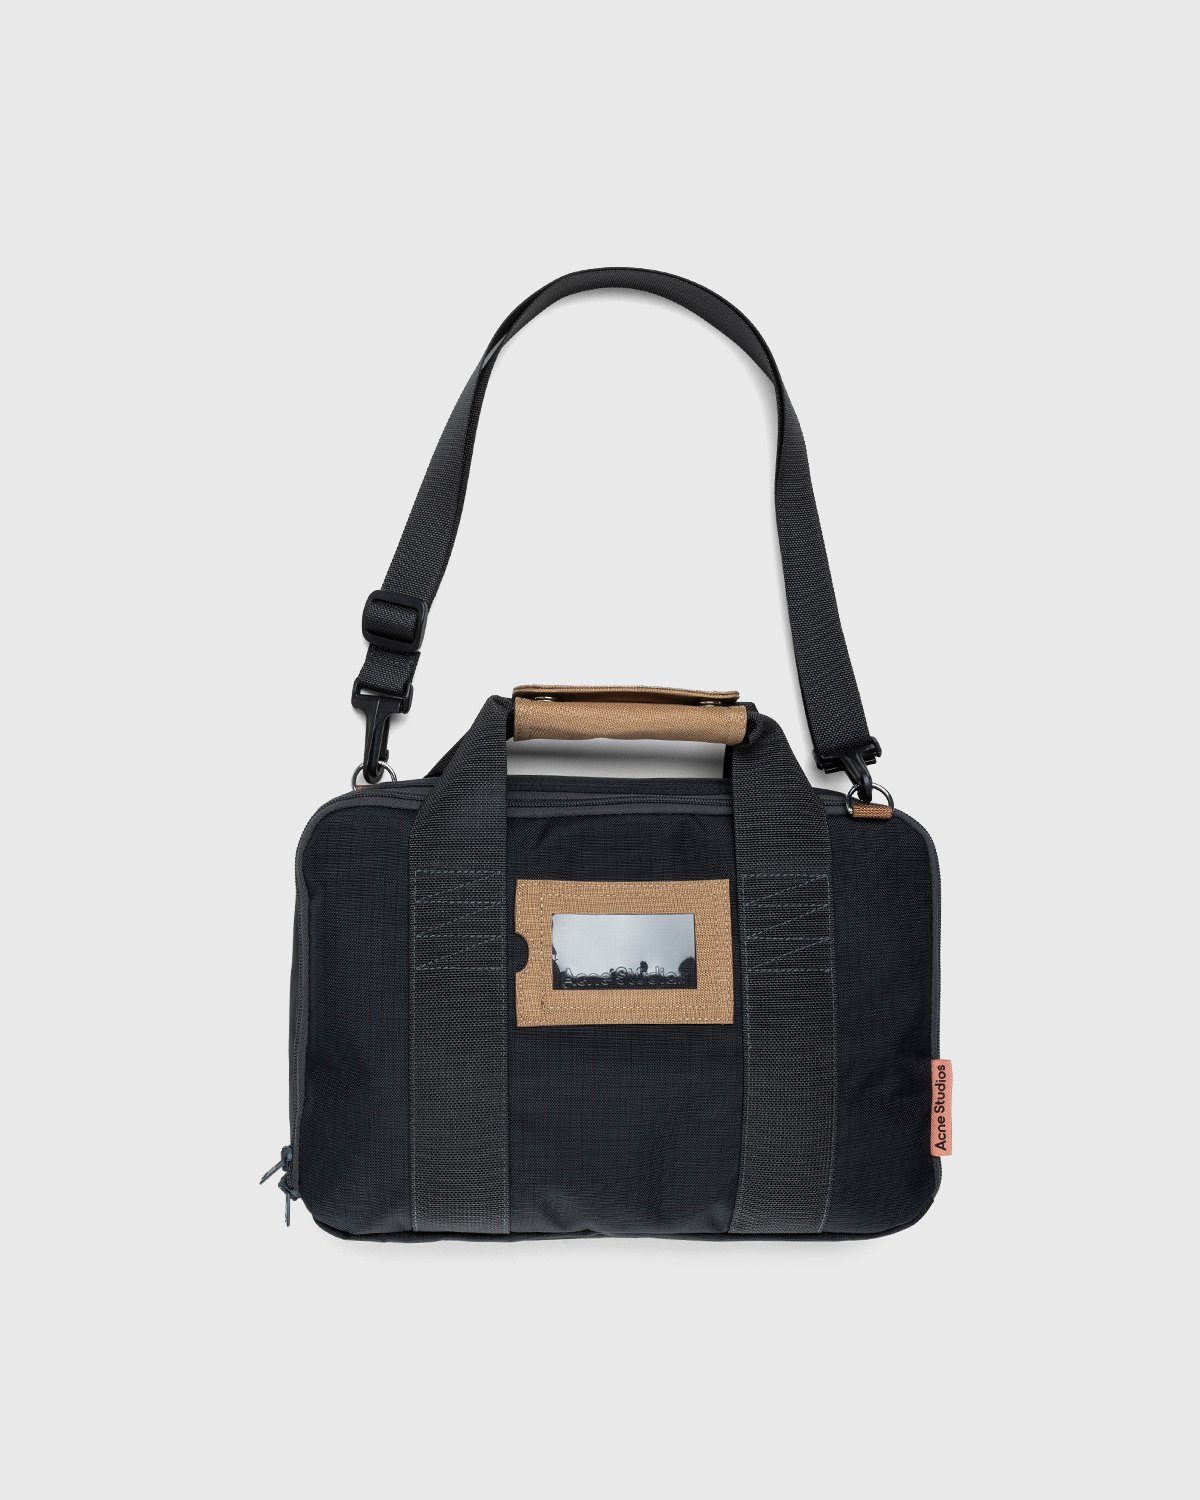 Acne Studios - Nylon Crossbody Laptop Bag Black/Khaki Green - Accessories - Black - Image 1